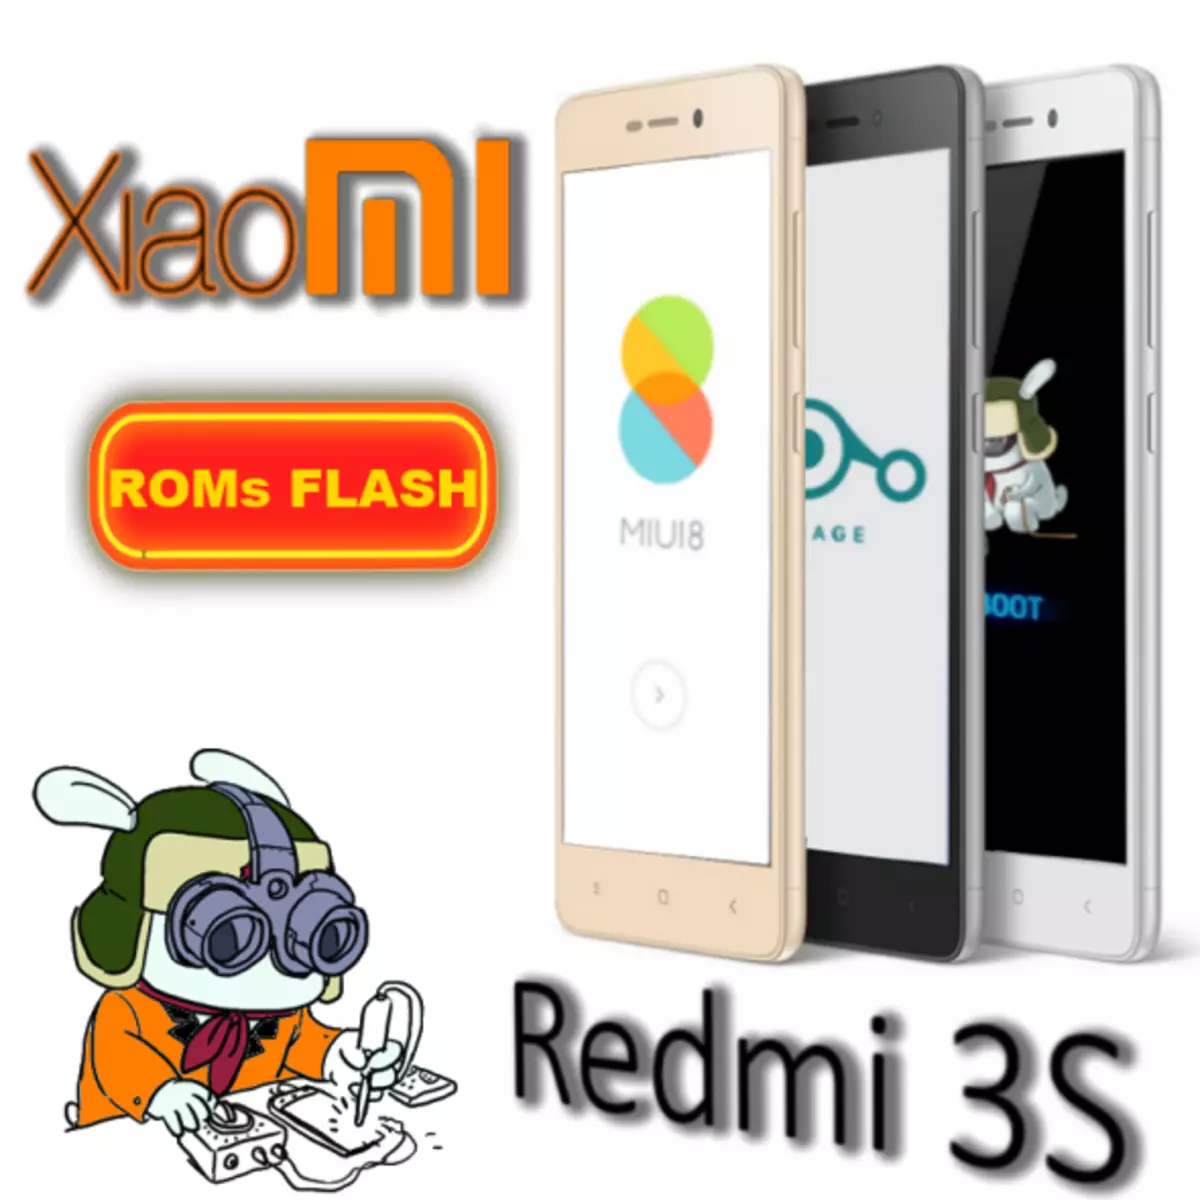 Xiaomi Redmi 3s Firmware